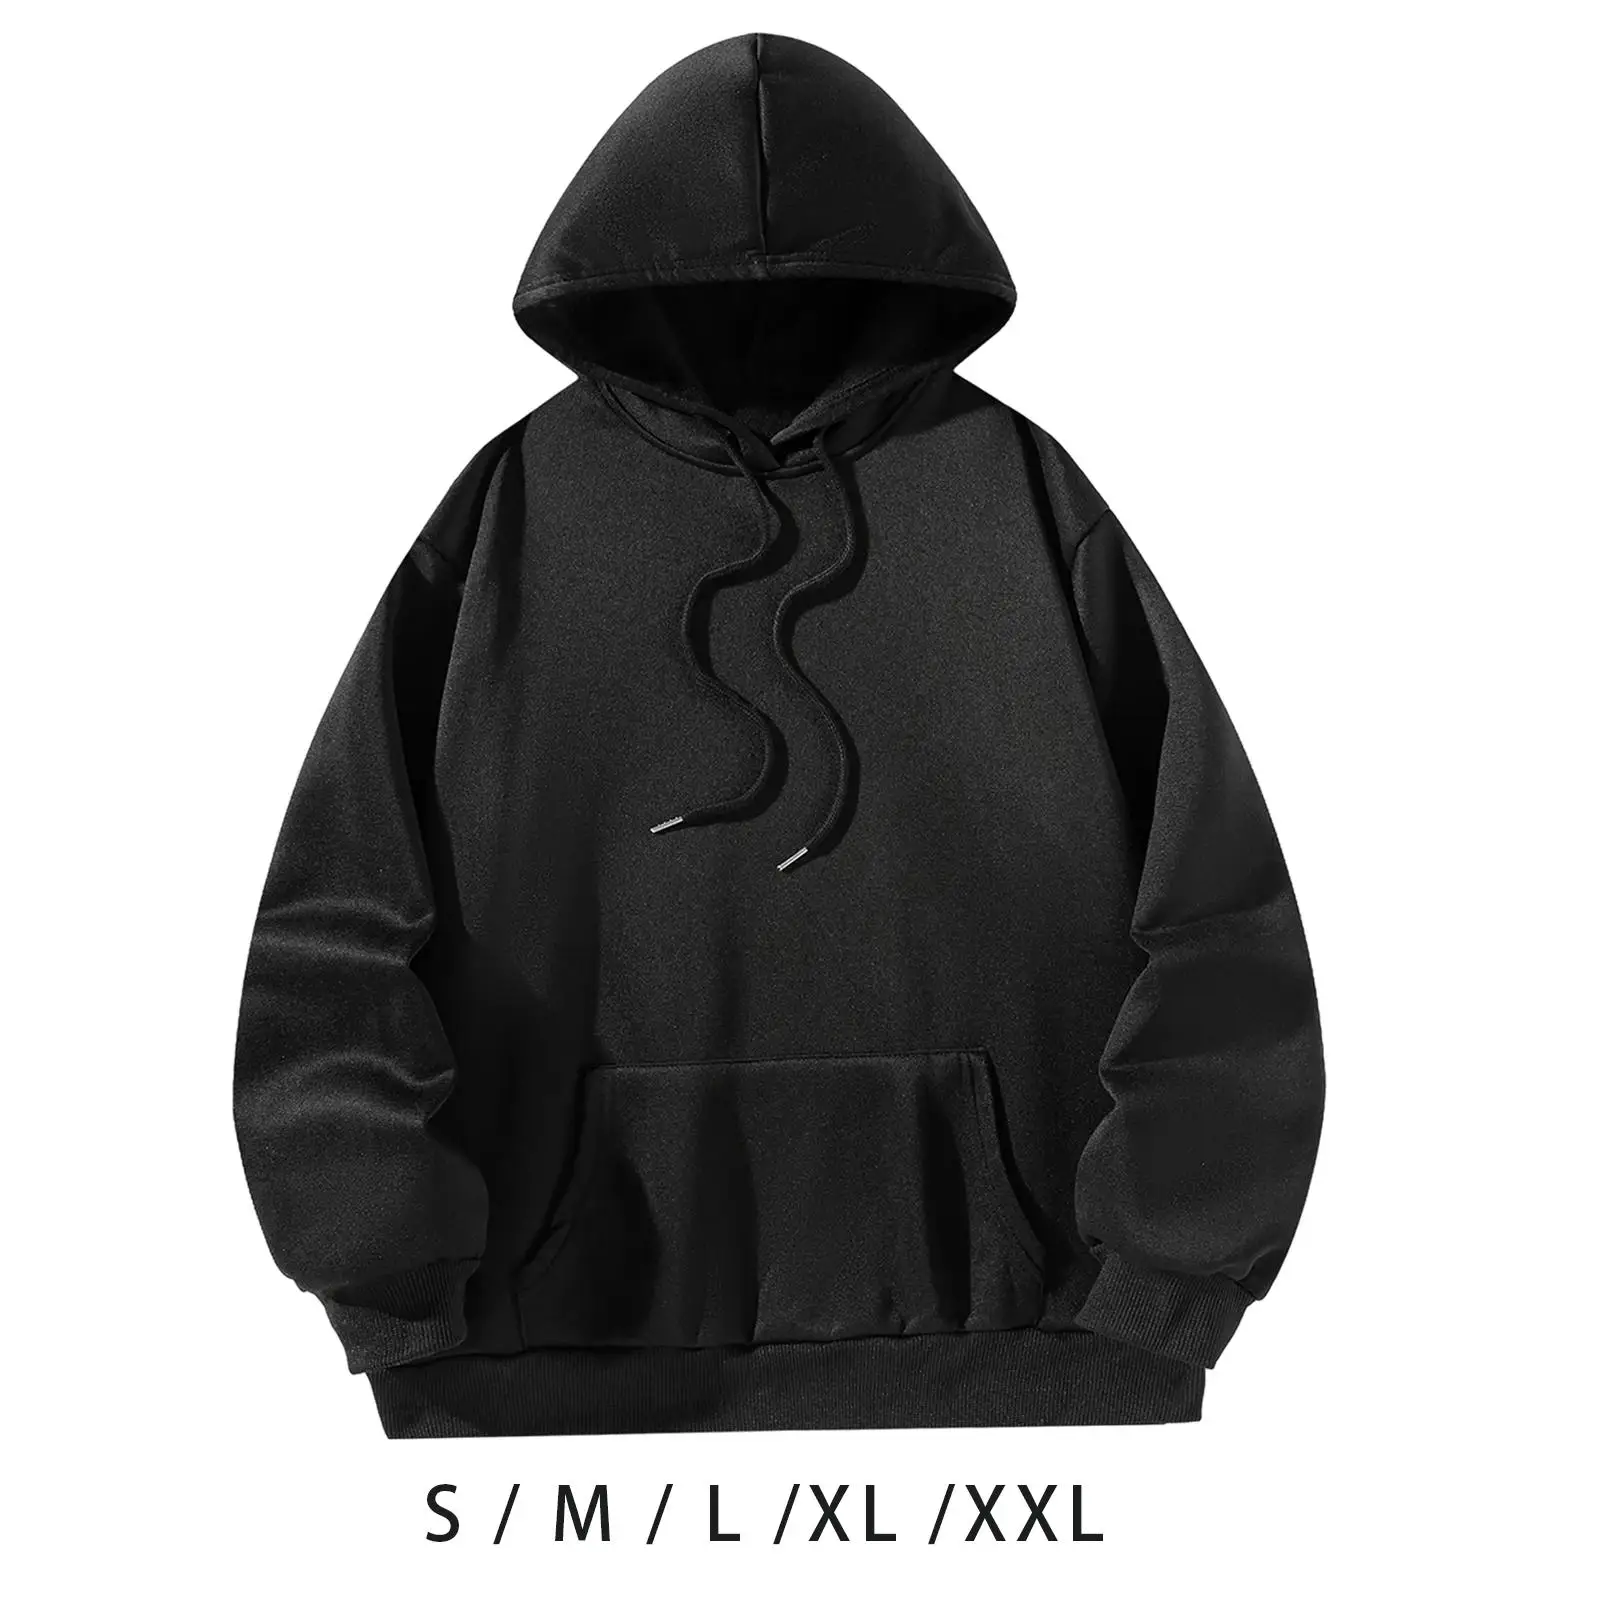 Drawstring Pullover Hoodie Black Fashion Lightweight Durable Soft Sweatshirt Tops for Office Camping Climbing Hiking Women Men